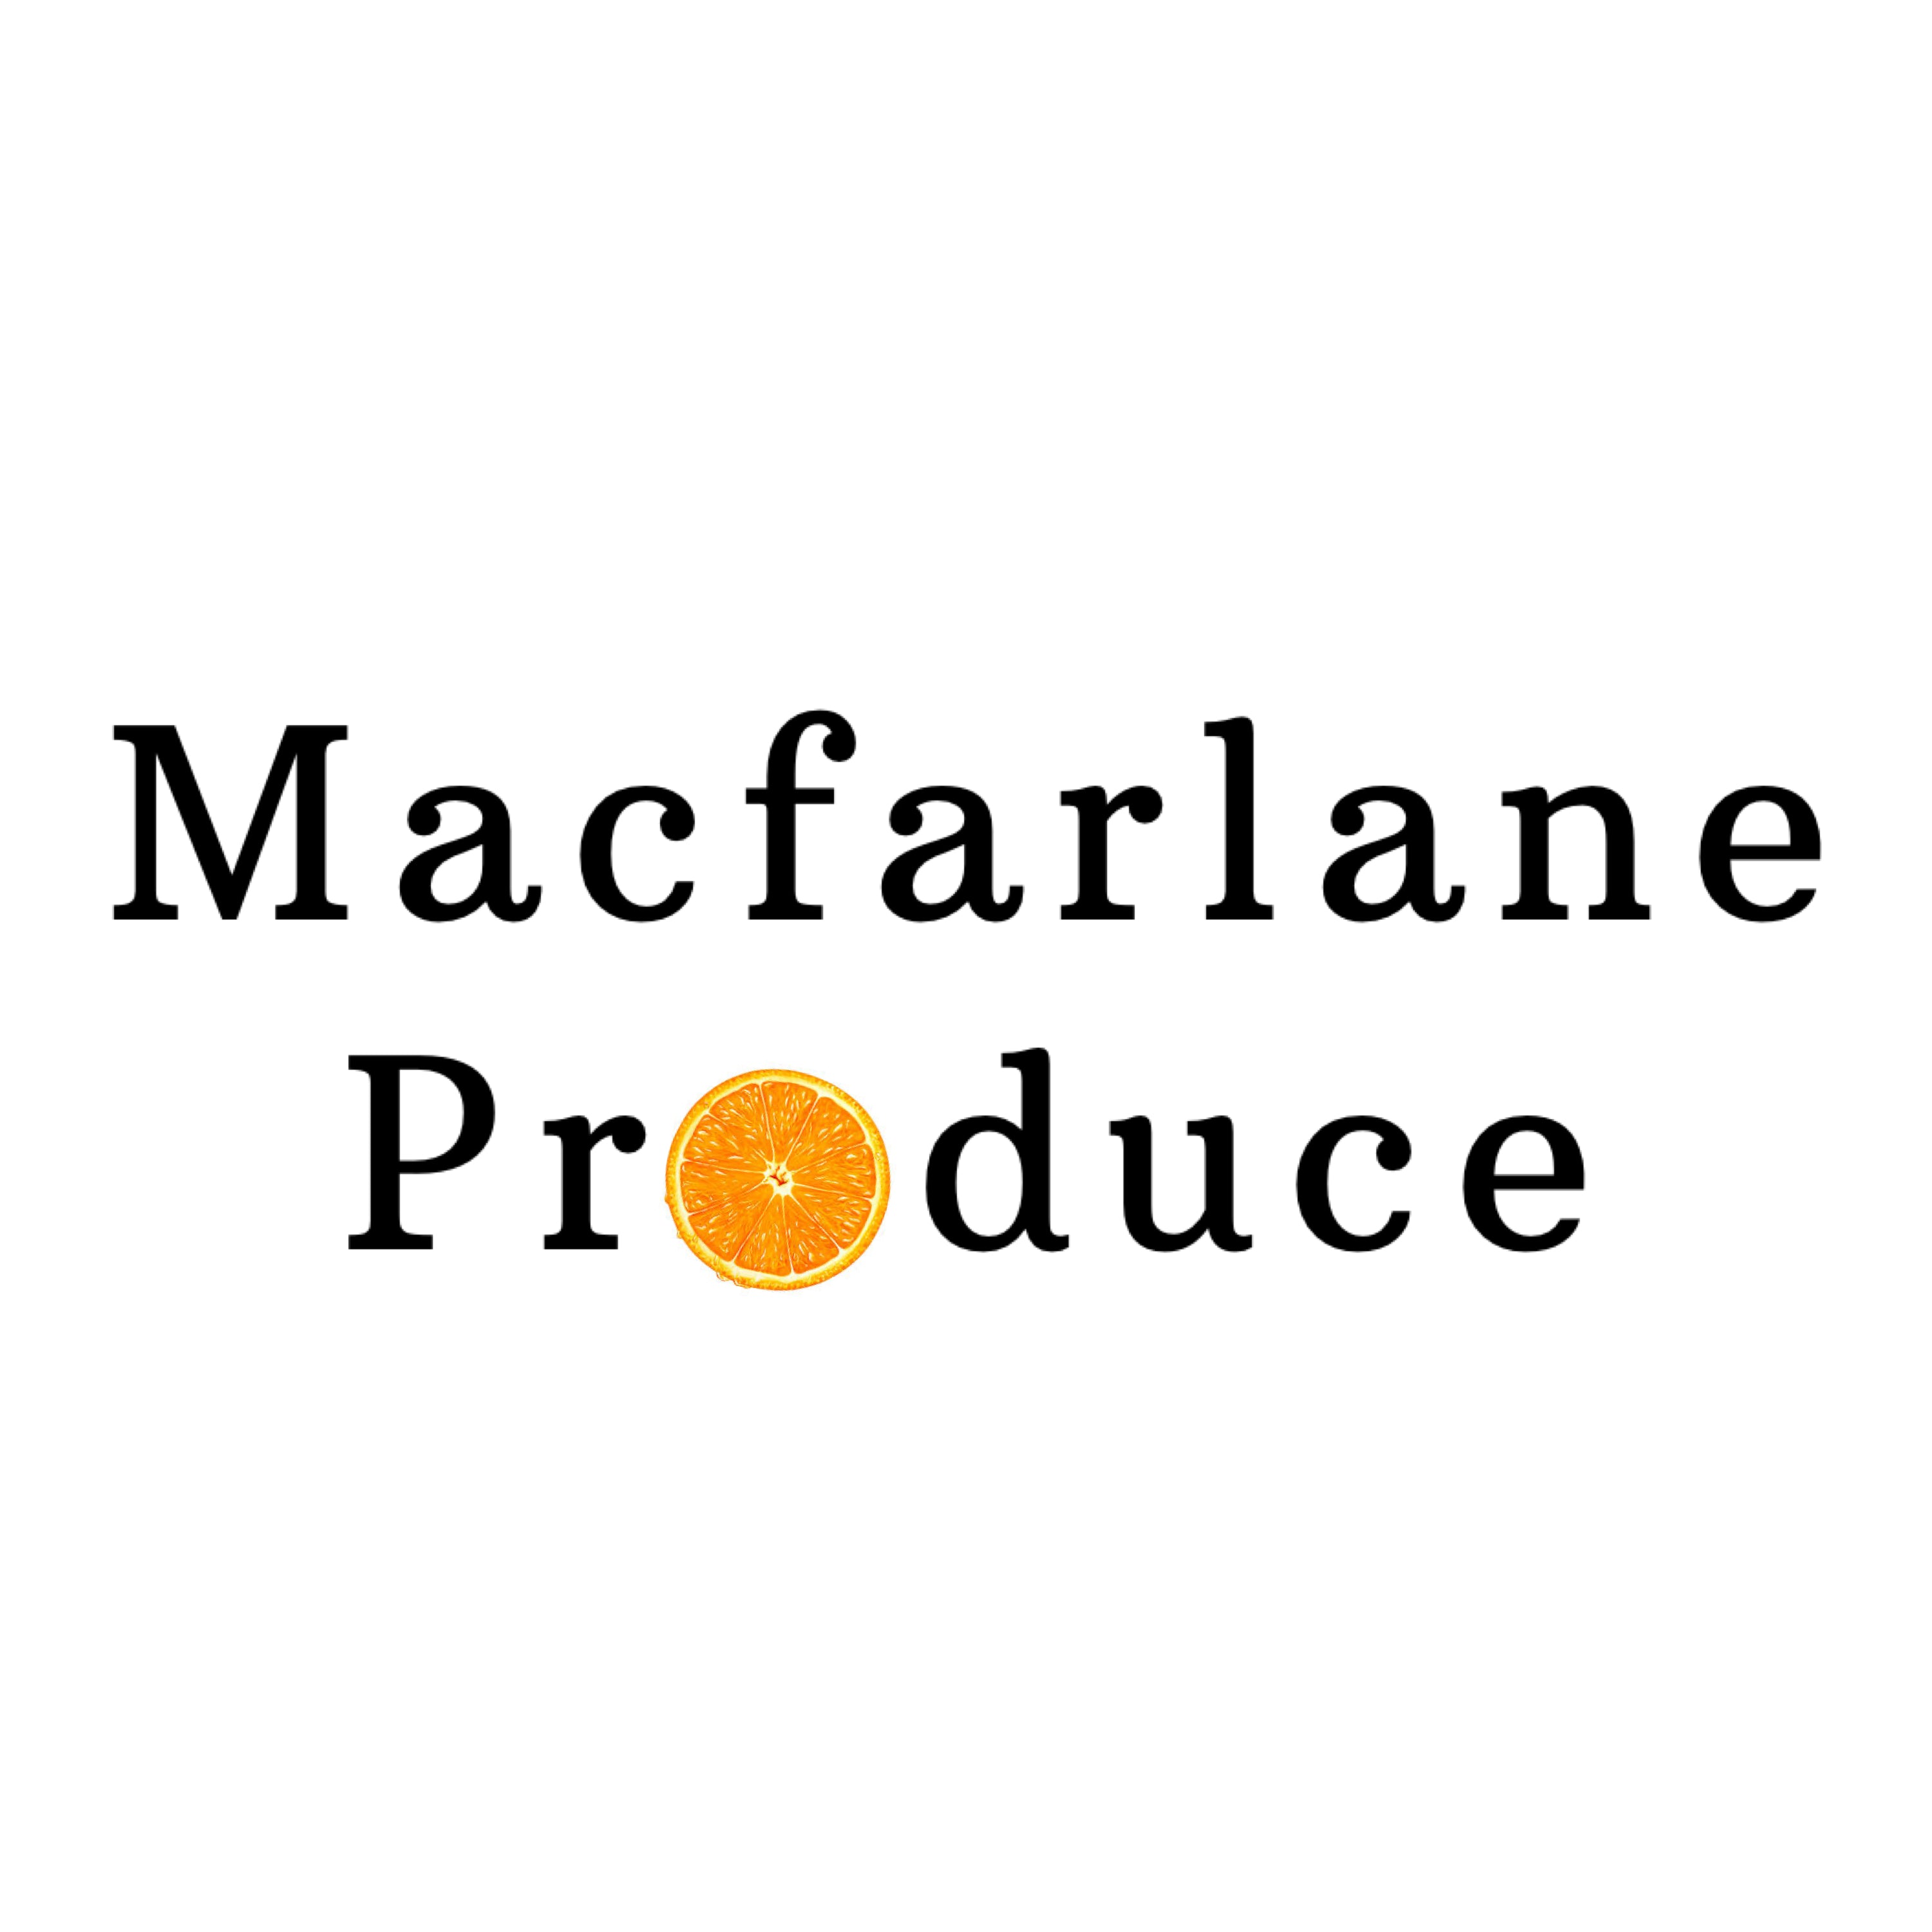 Macfarlane produce